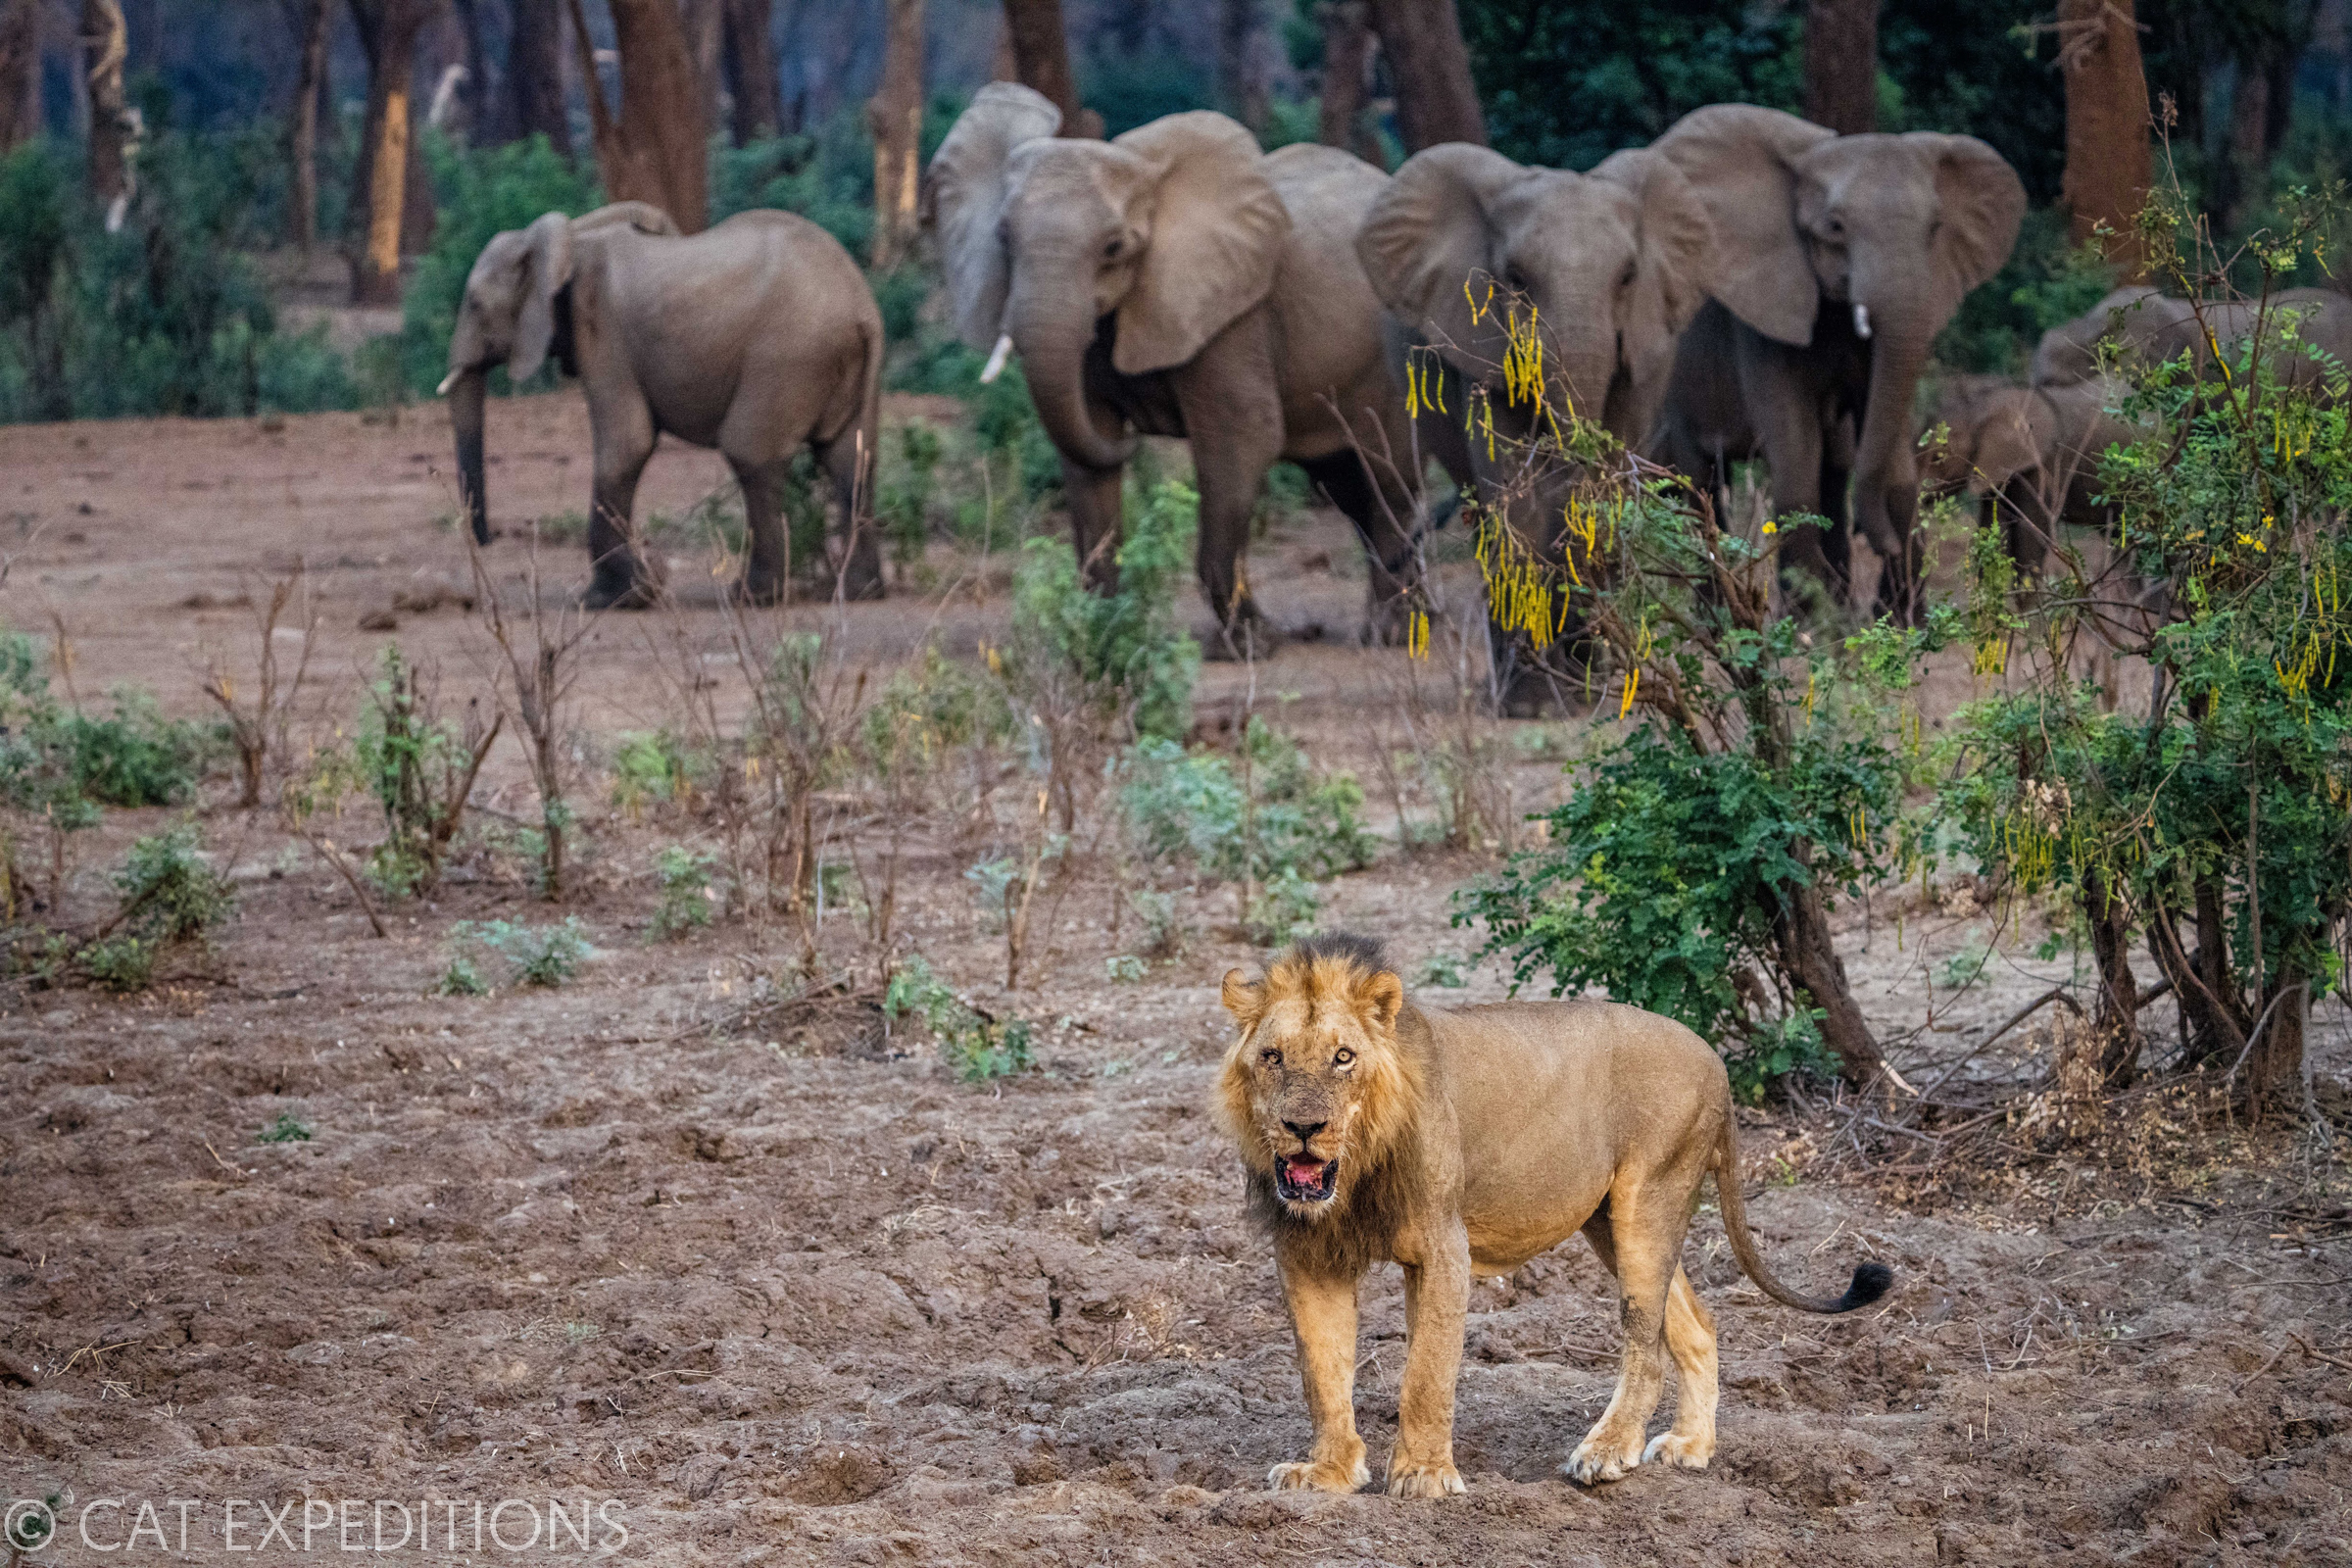 Lion (Panthera leop) male near defensive breeding herd of elephants, Lower Zambezi National Park, Zambia